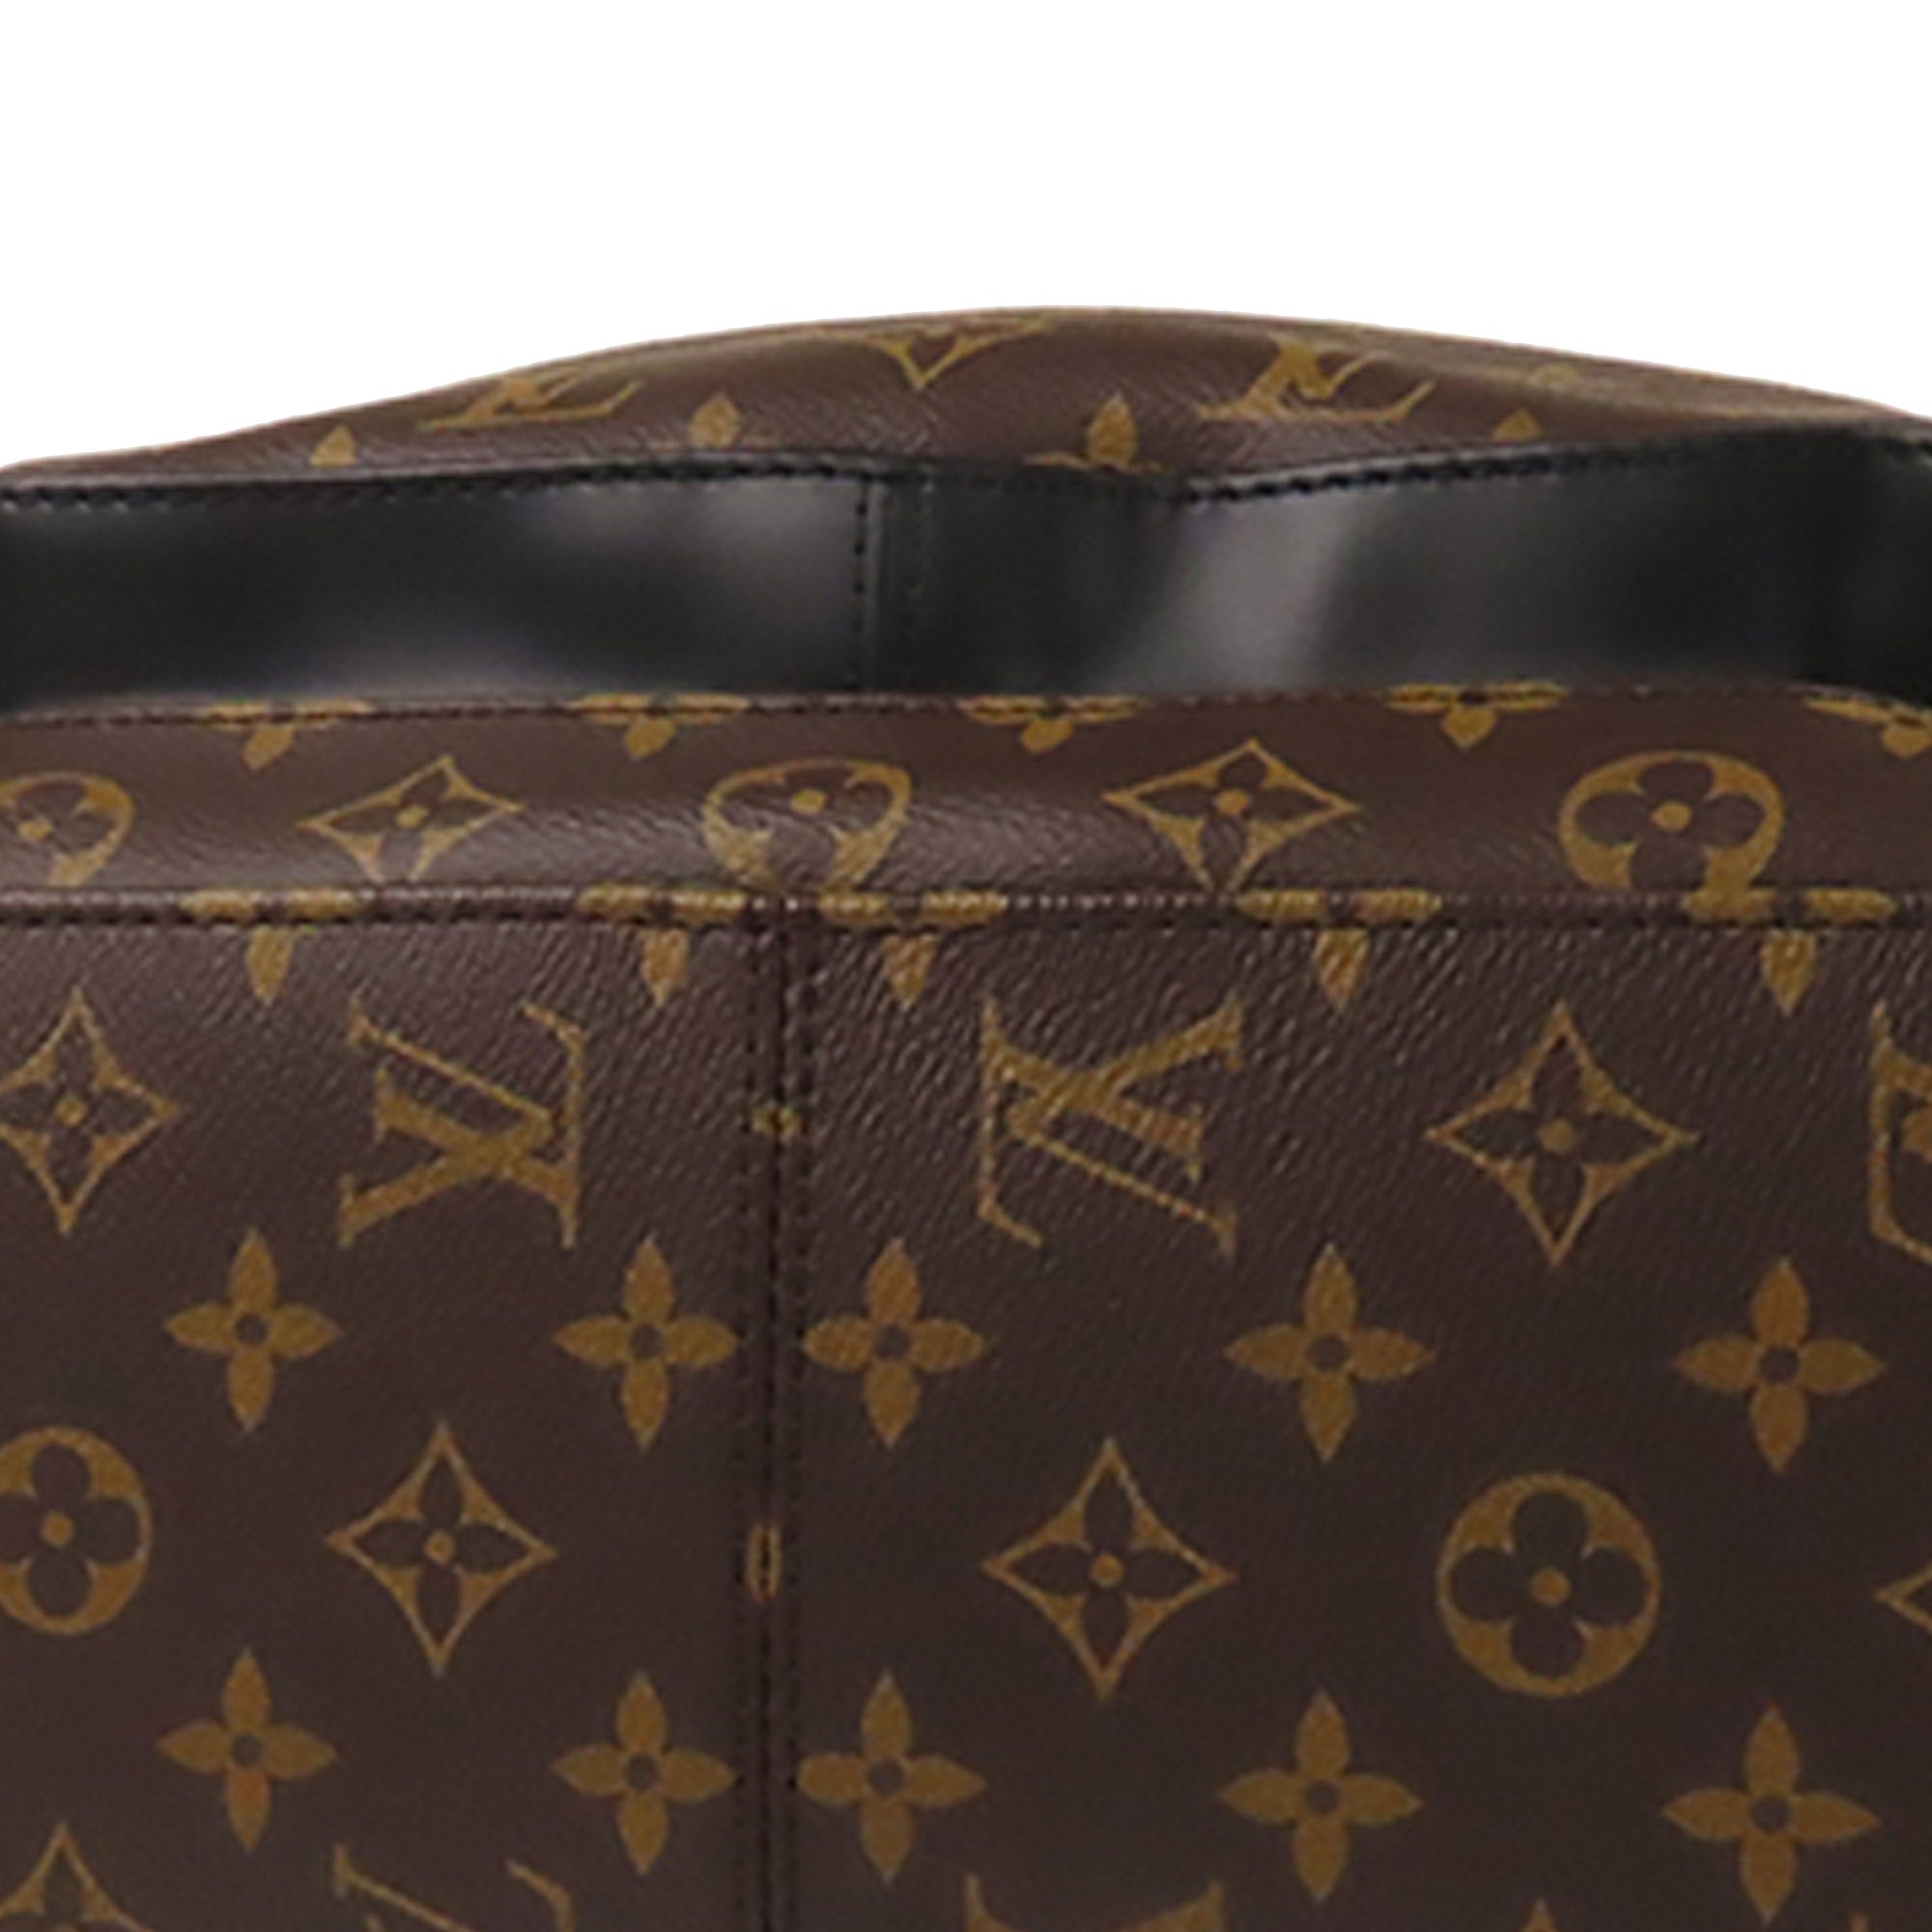 M41530 Louis Vuitton 2016 Men Monogram Macassar Josh Backpack